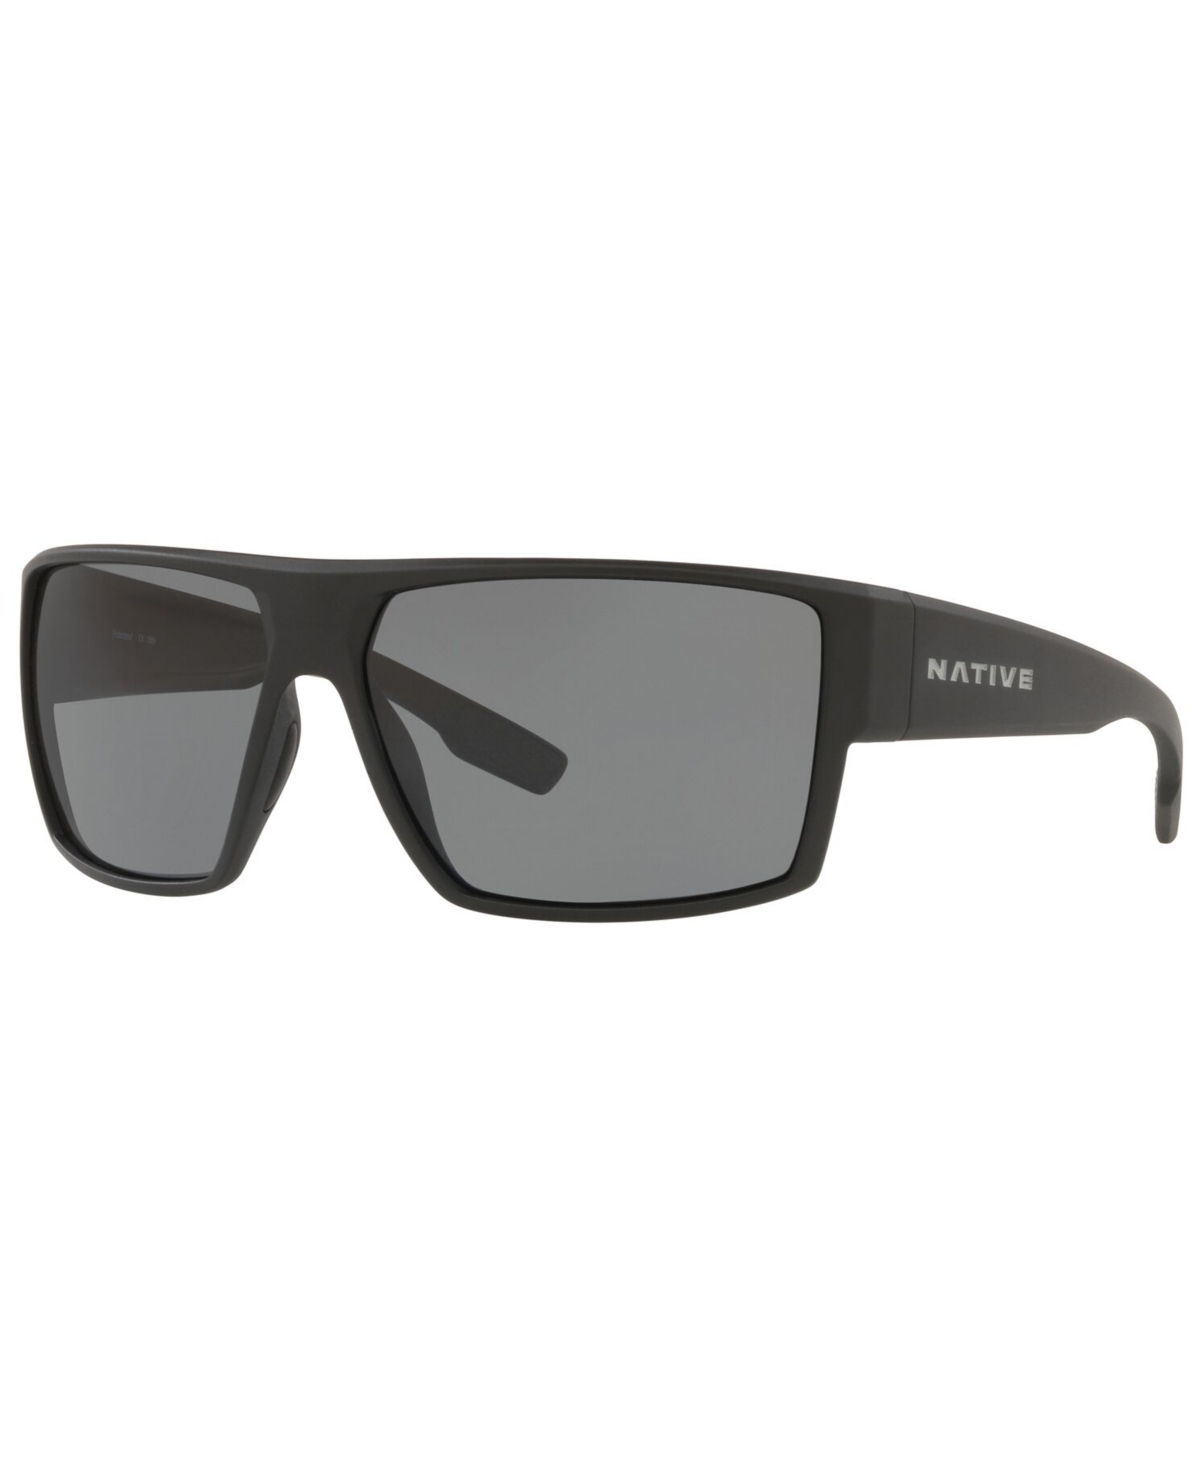 Native Eyewear Native Men's Polarized Sunglasses, Xd9013 In Matte Black,grey